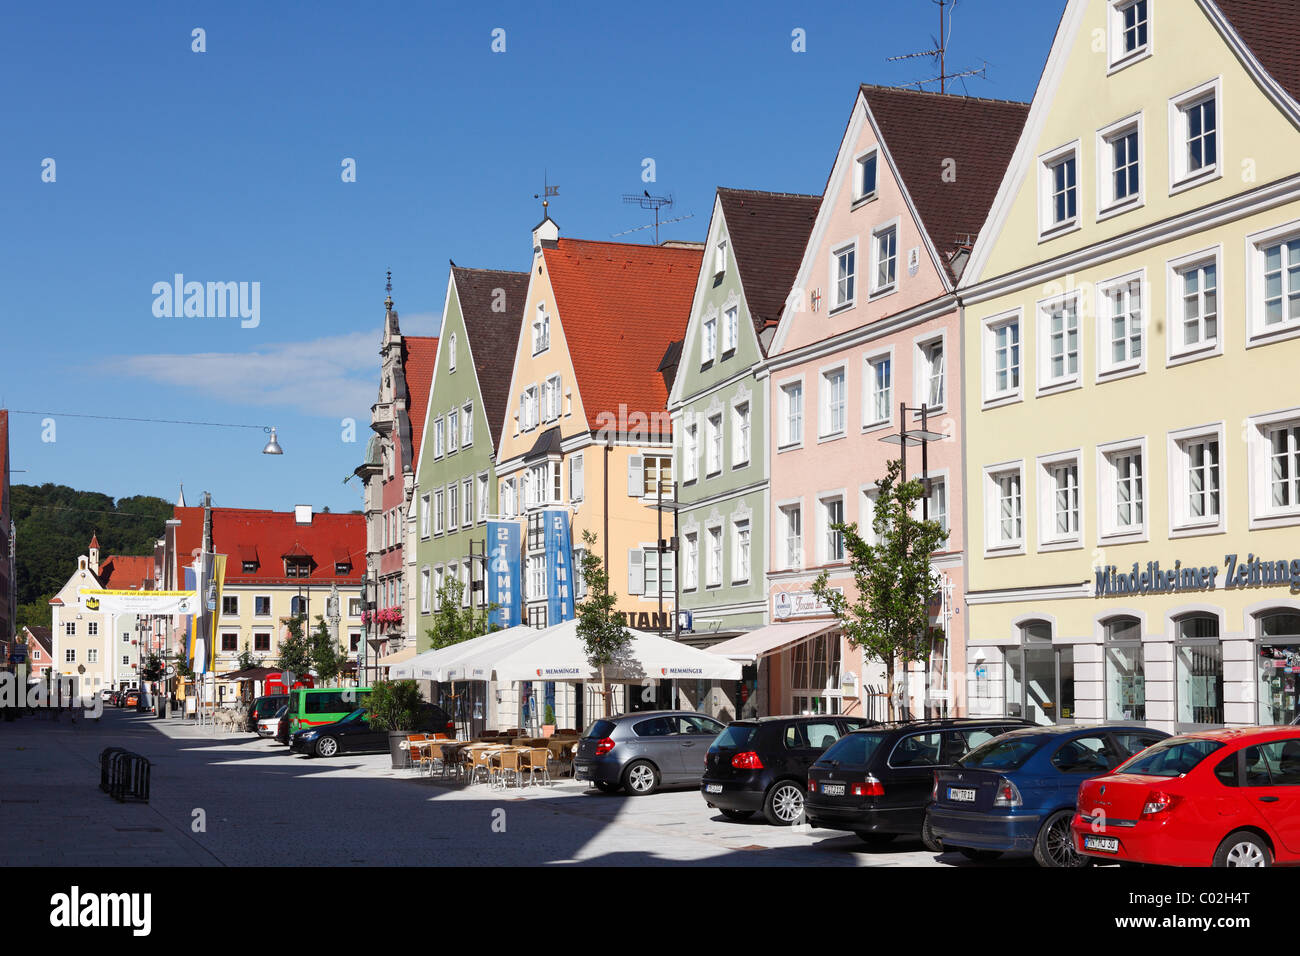 Maximilianstrasse street, Mindelheim, Unterallgaeu district, Allgaeu region, Swabia, Bavaria, Germany, Europe Stock Photo